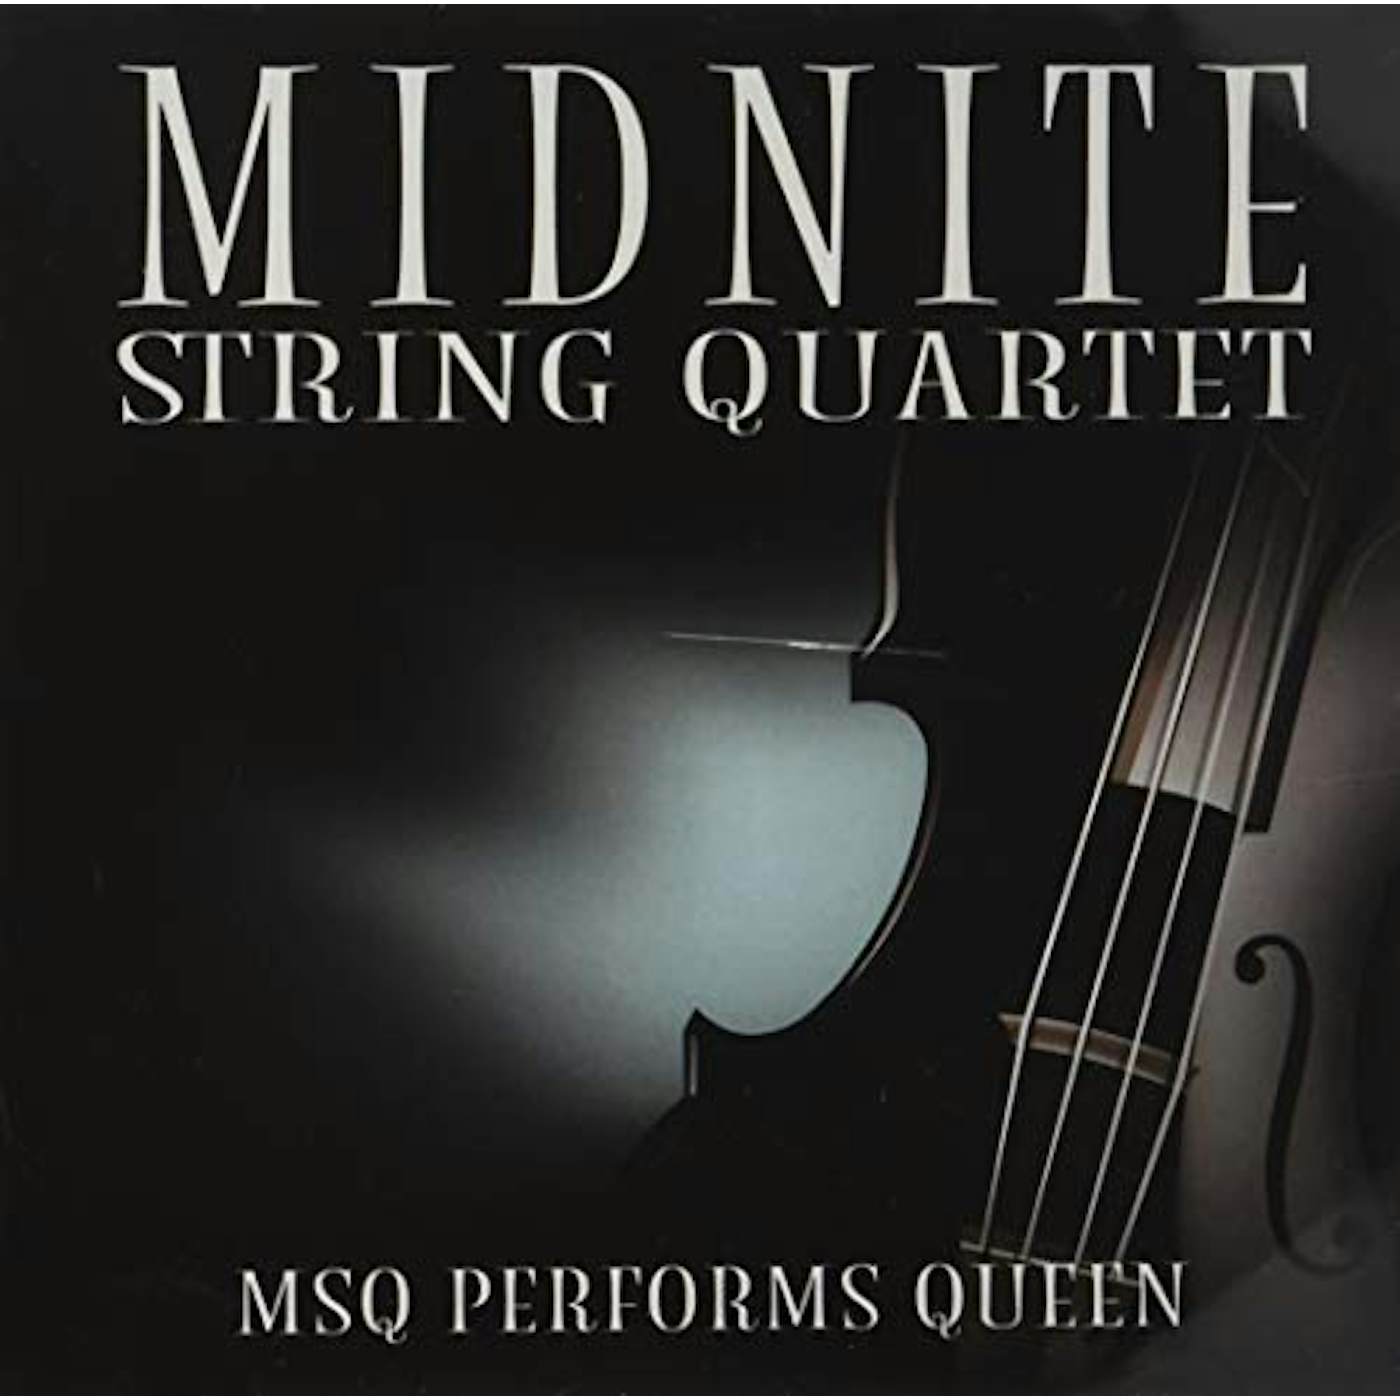 Midnite String Quartet MSQ PERFORMS QUEEN (MOD) CD